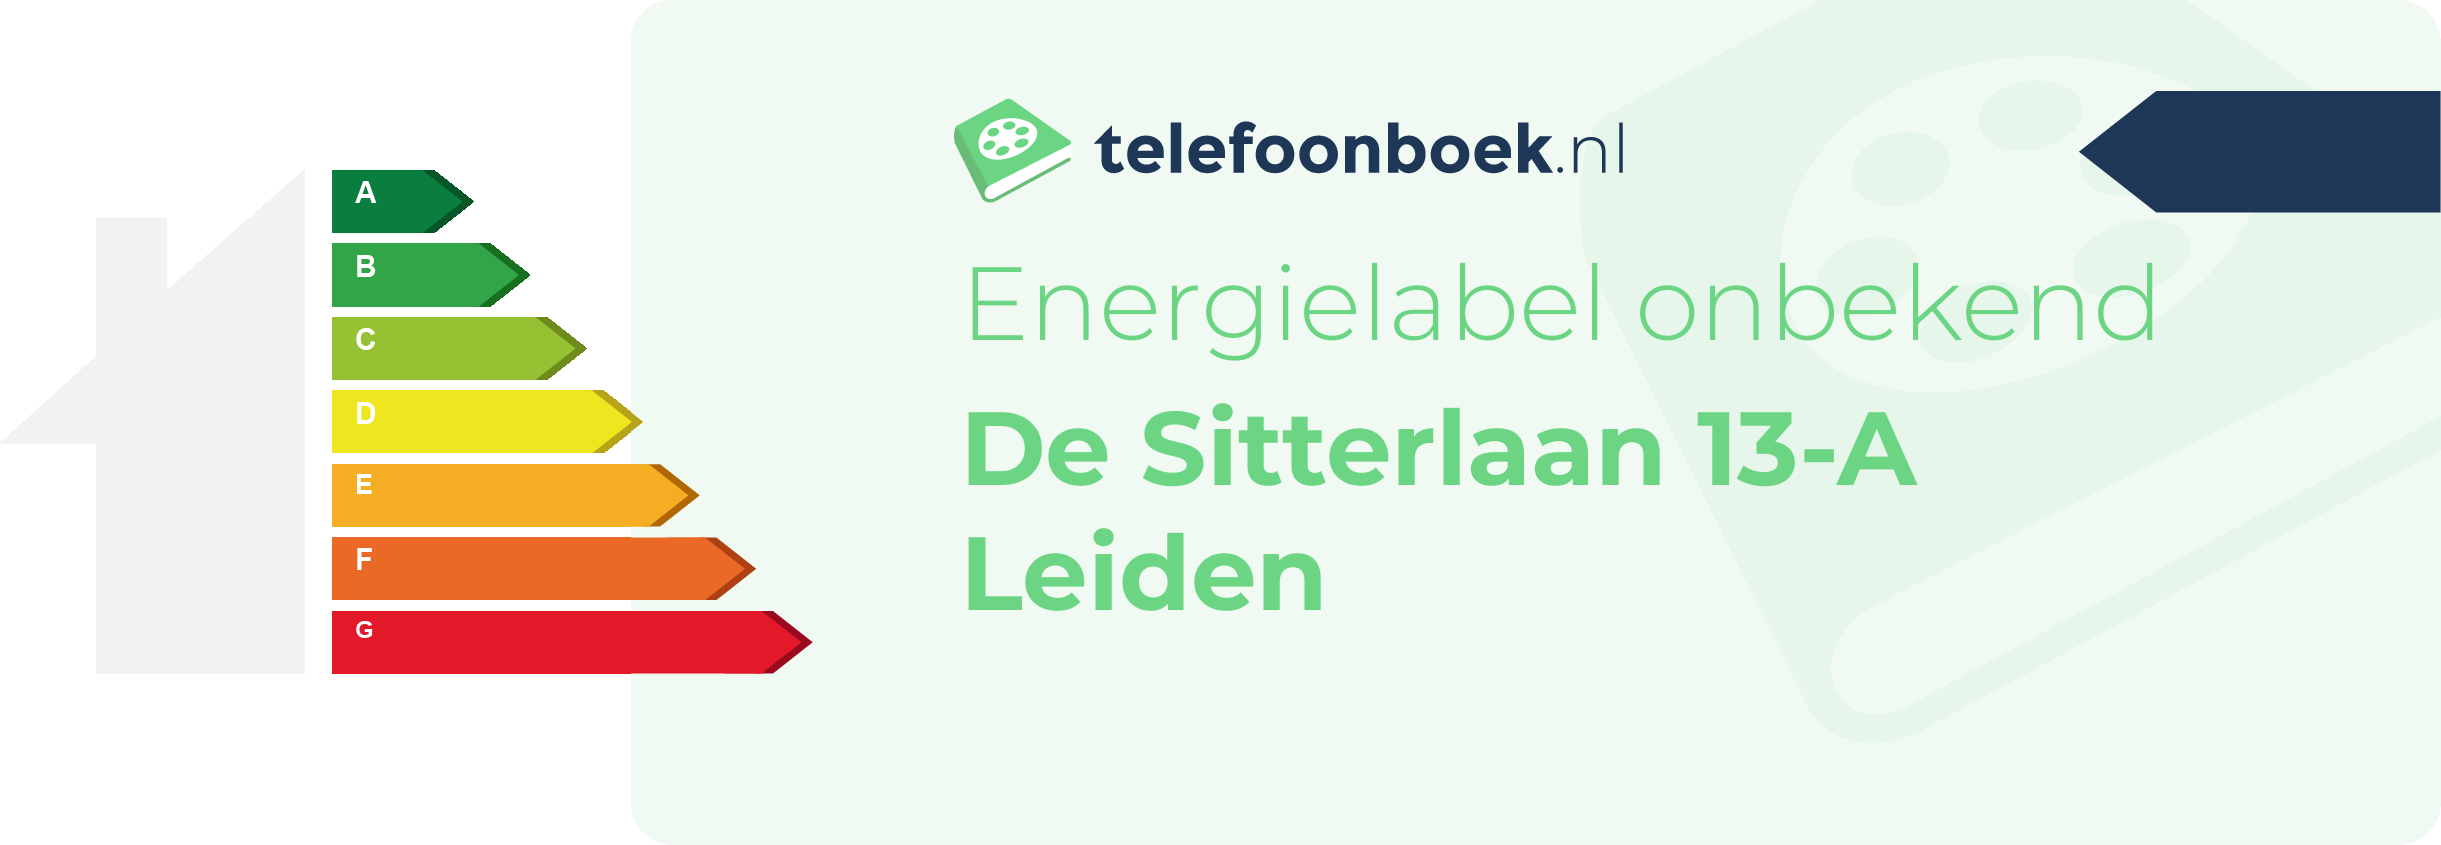 Energielabel De Sitterlaan 13-A Leiden